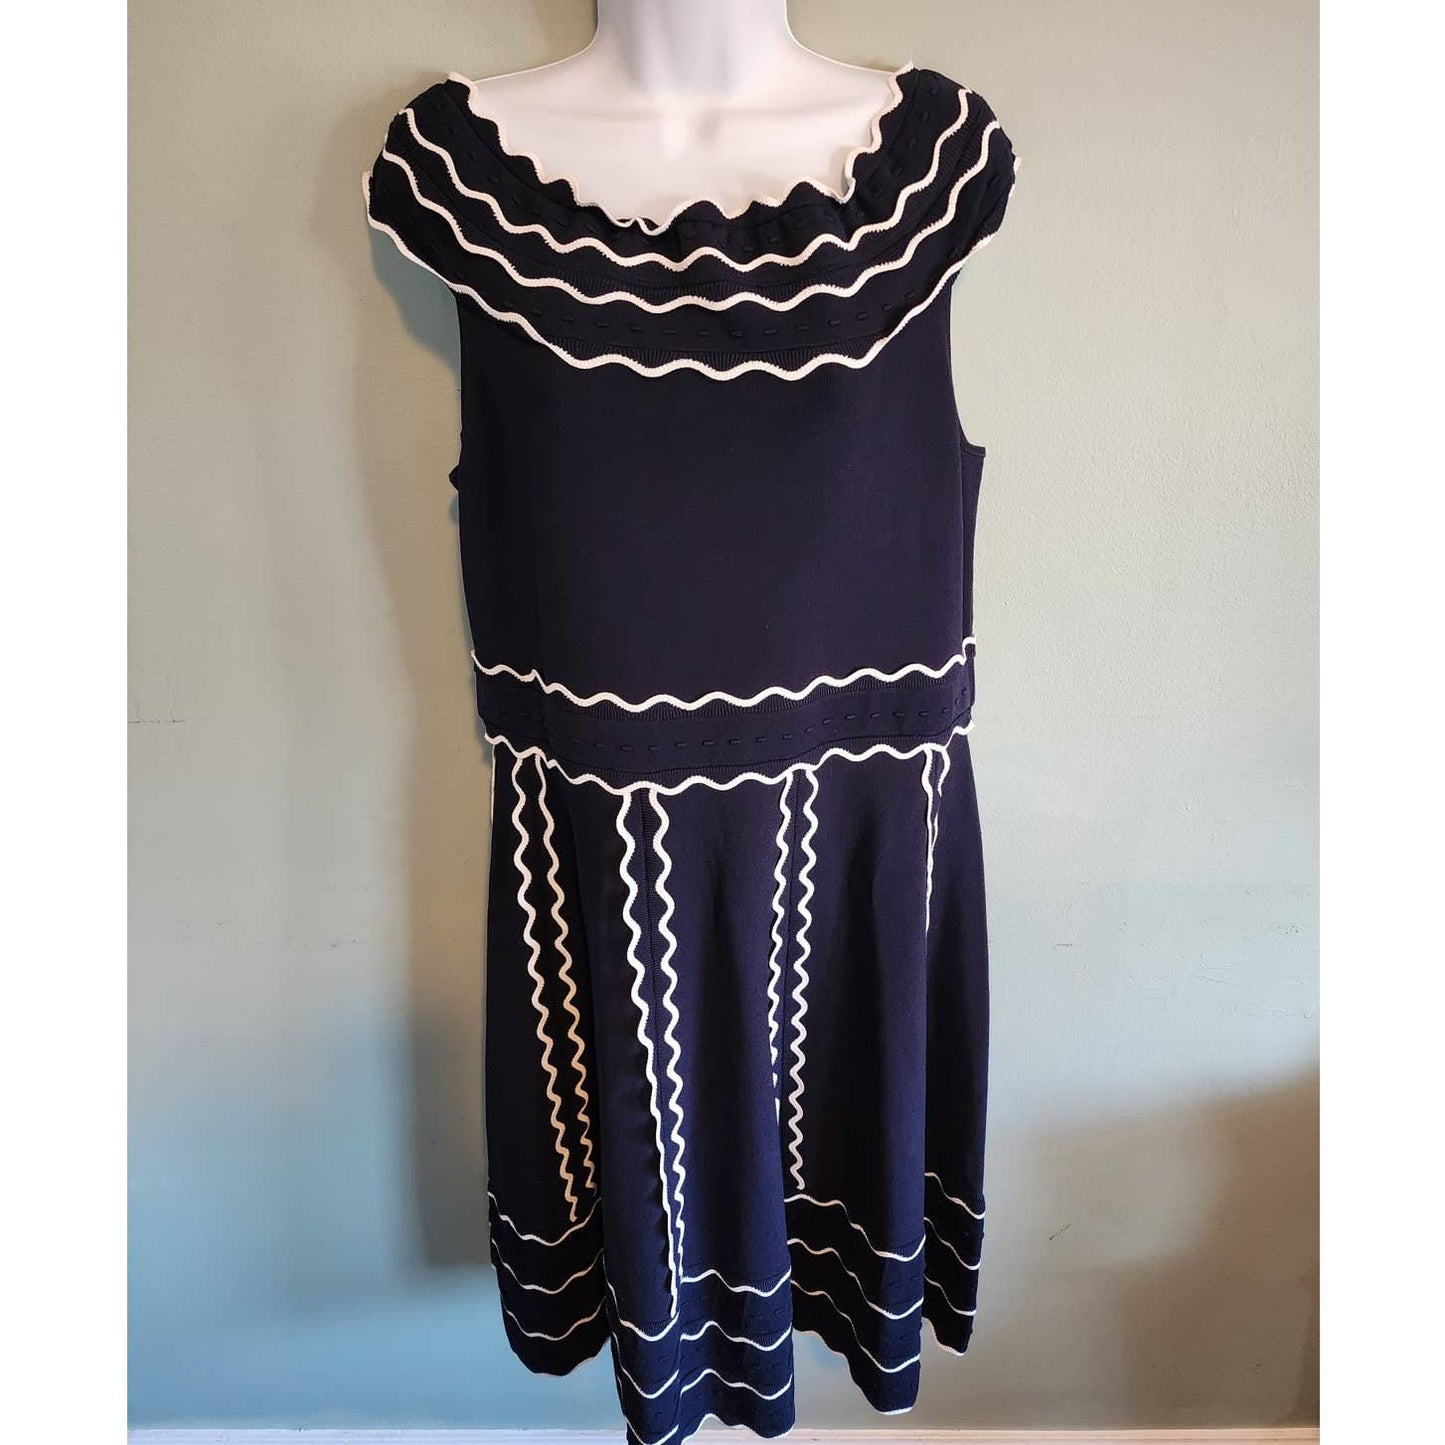 Kate Spade Madison Avenue Orlena Dress Navy Blue & White size XL - NWT